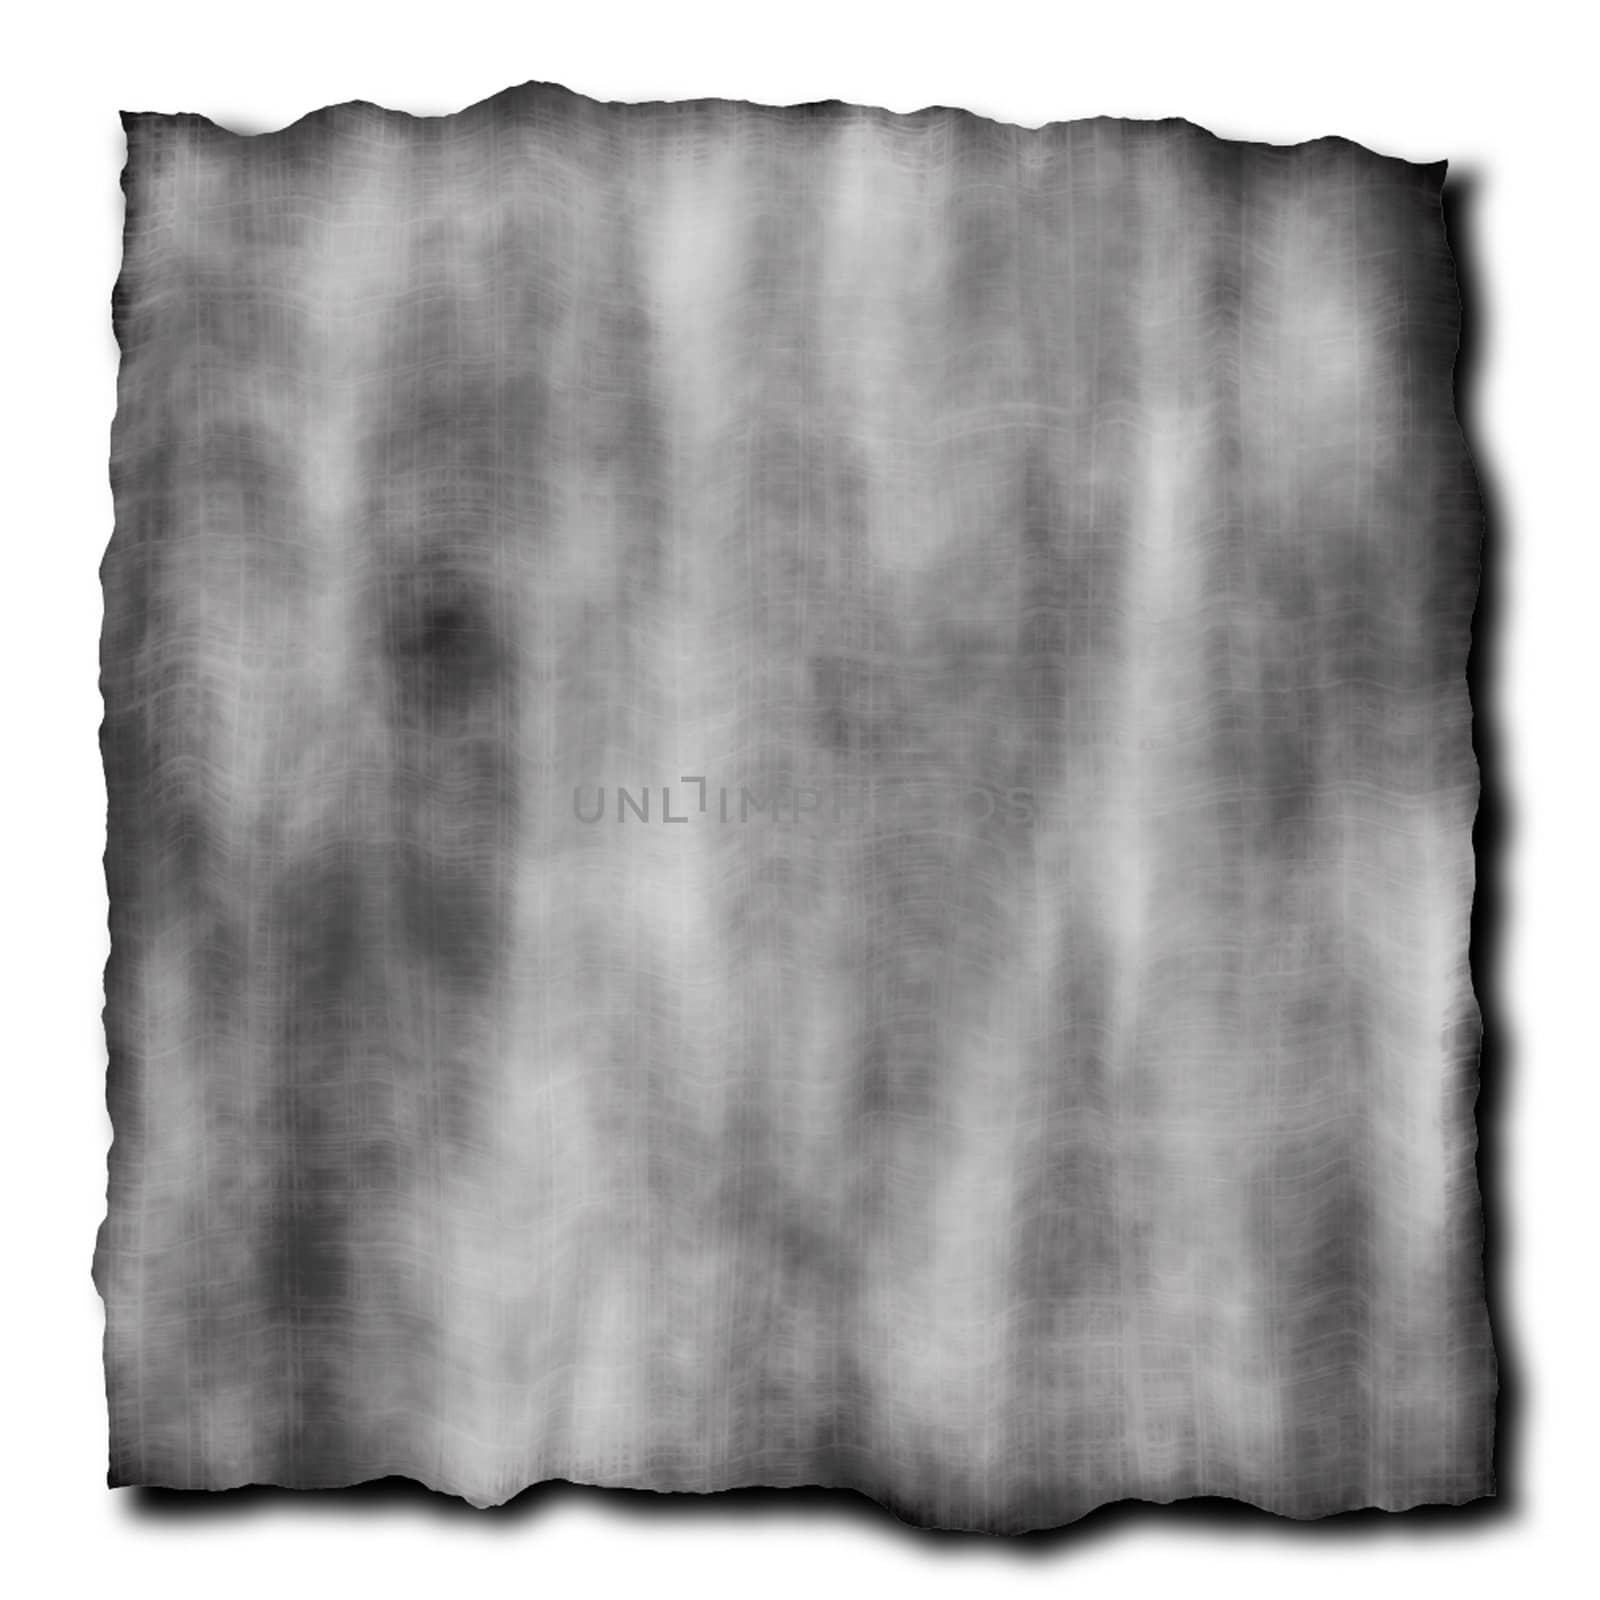 burnt paper in gray by nadil